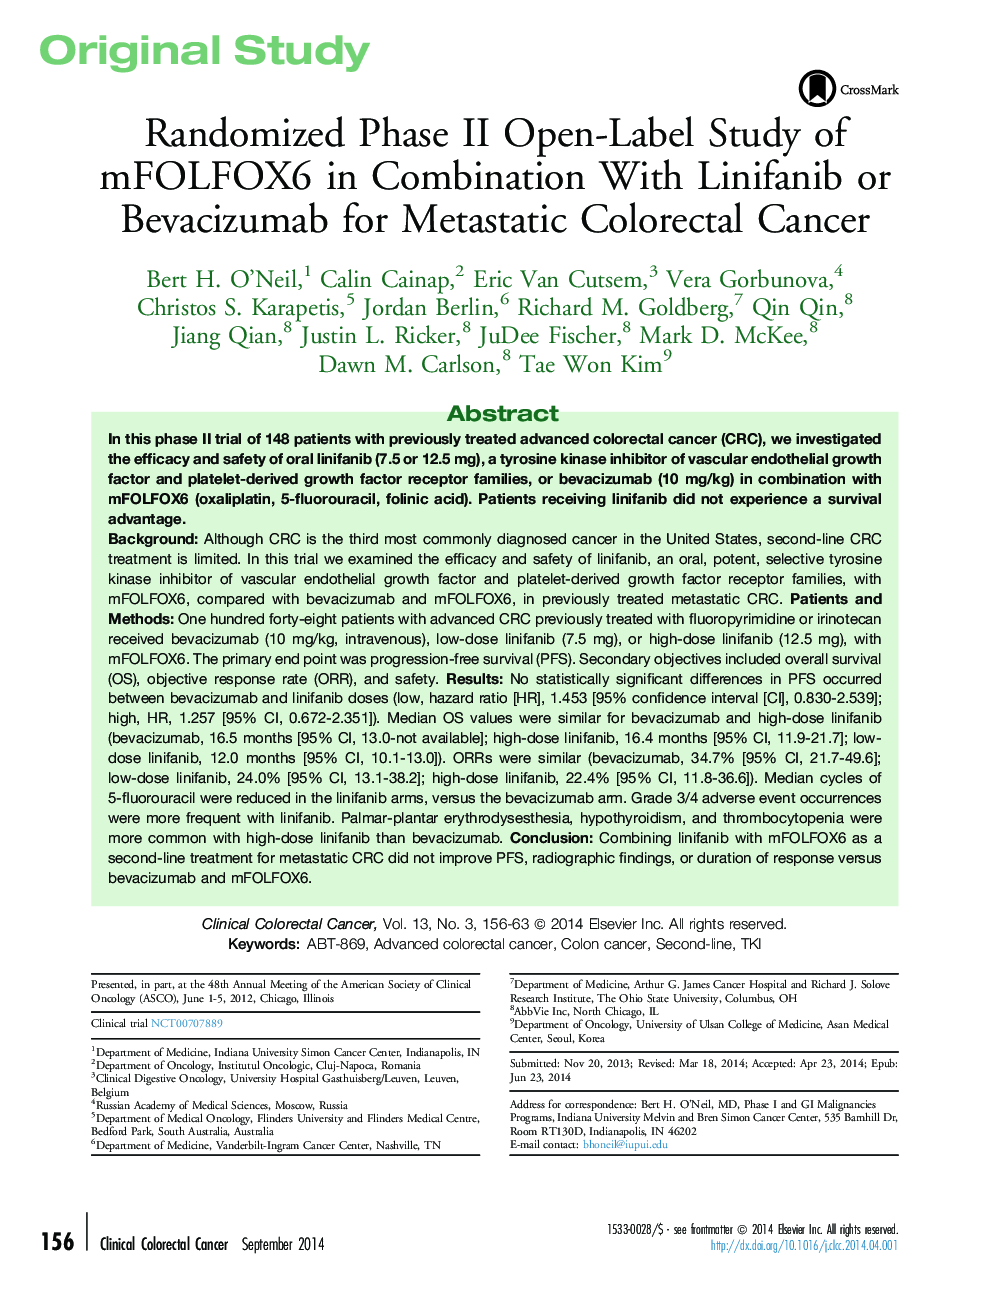 Randomized Phase II Open-Label Study of mFOLFOX6 in Combination With Linifanib or Bevacizumab for Metastatic Colorectal Cancer